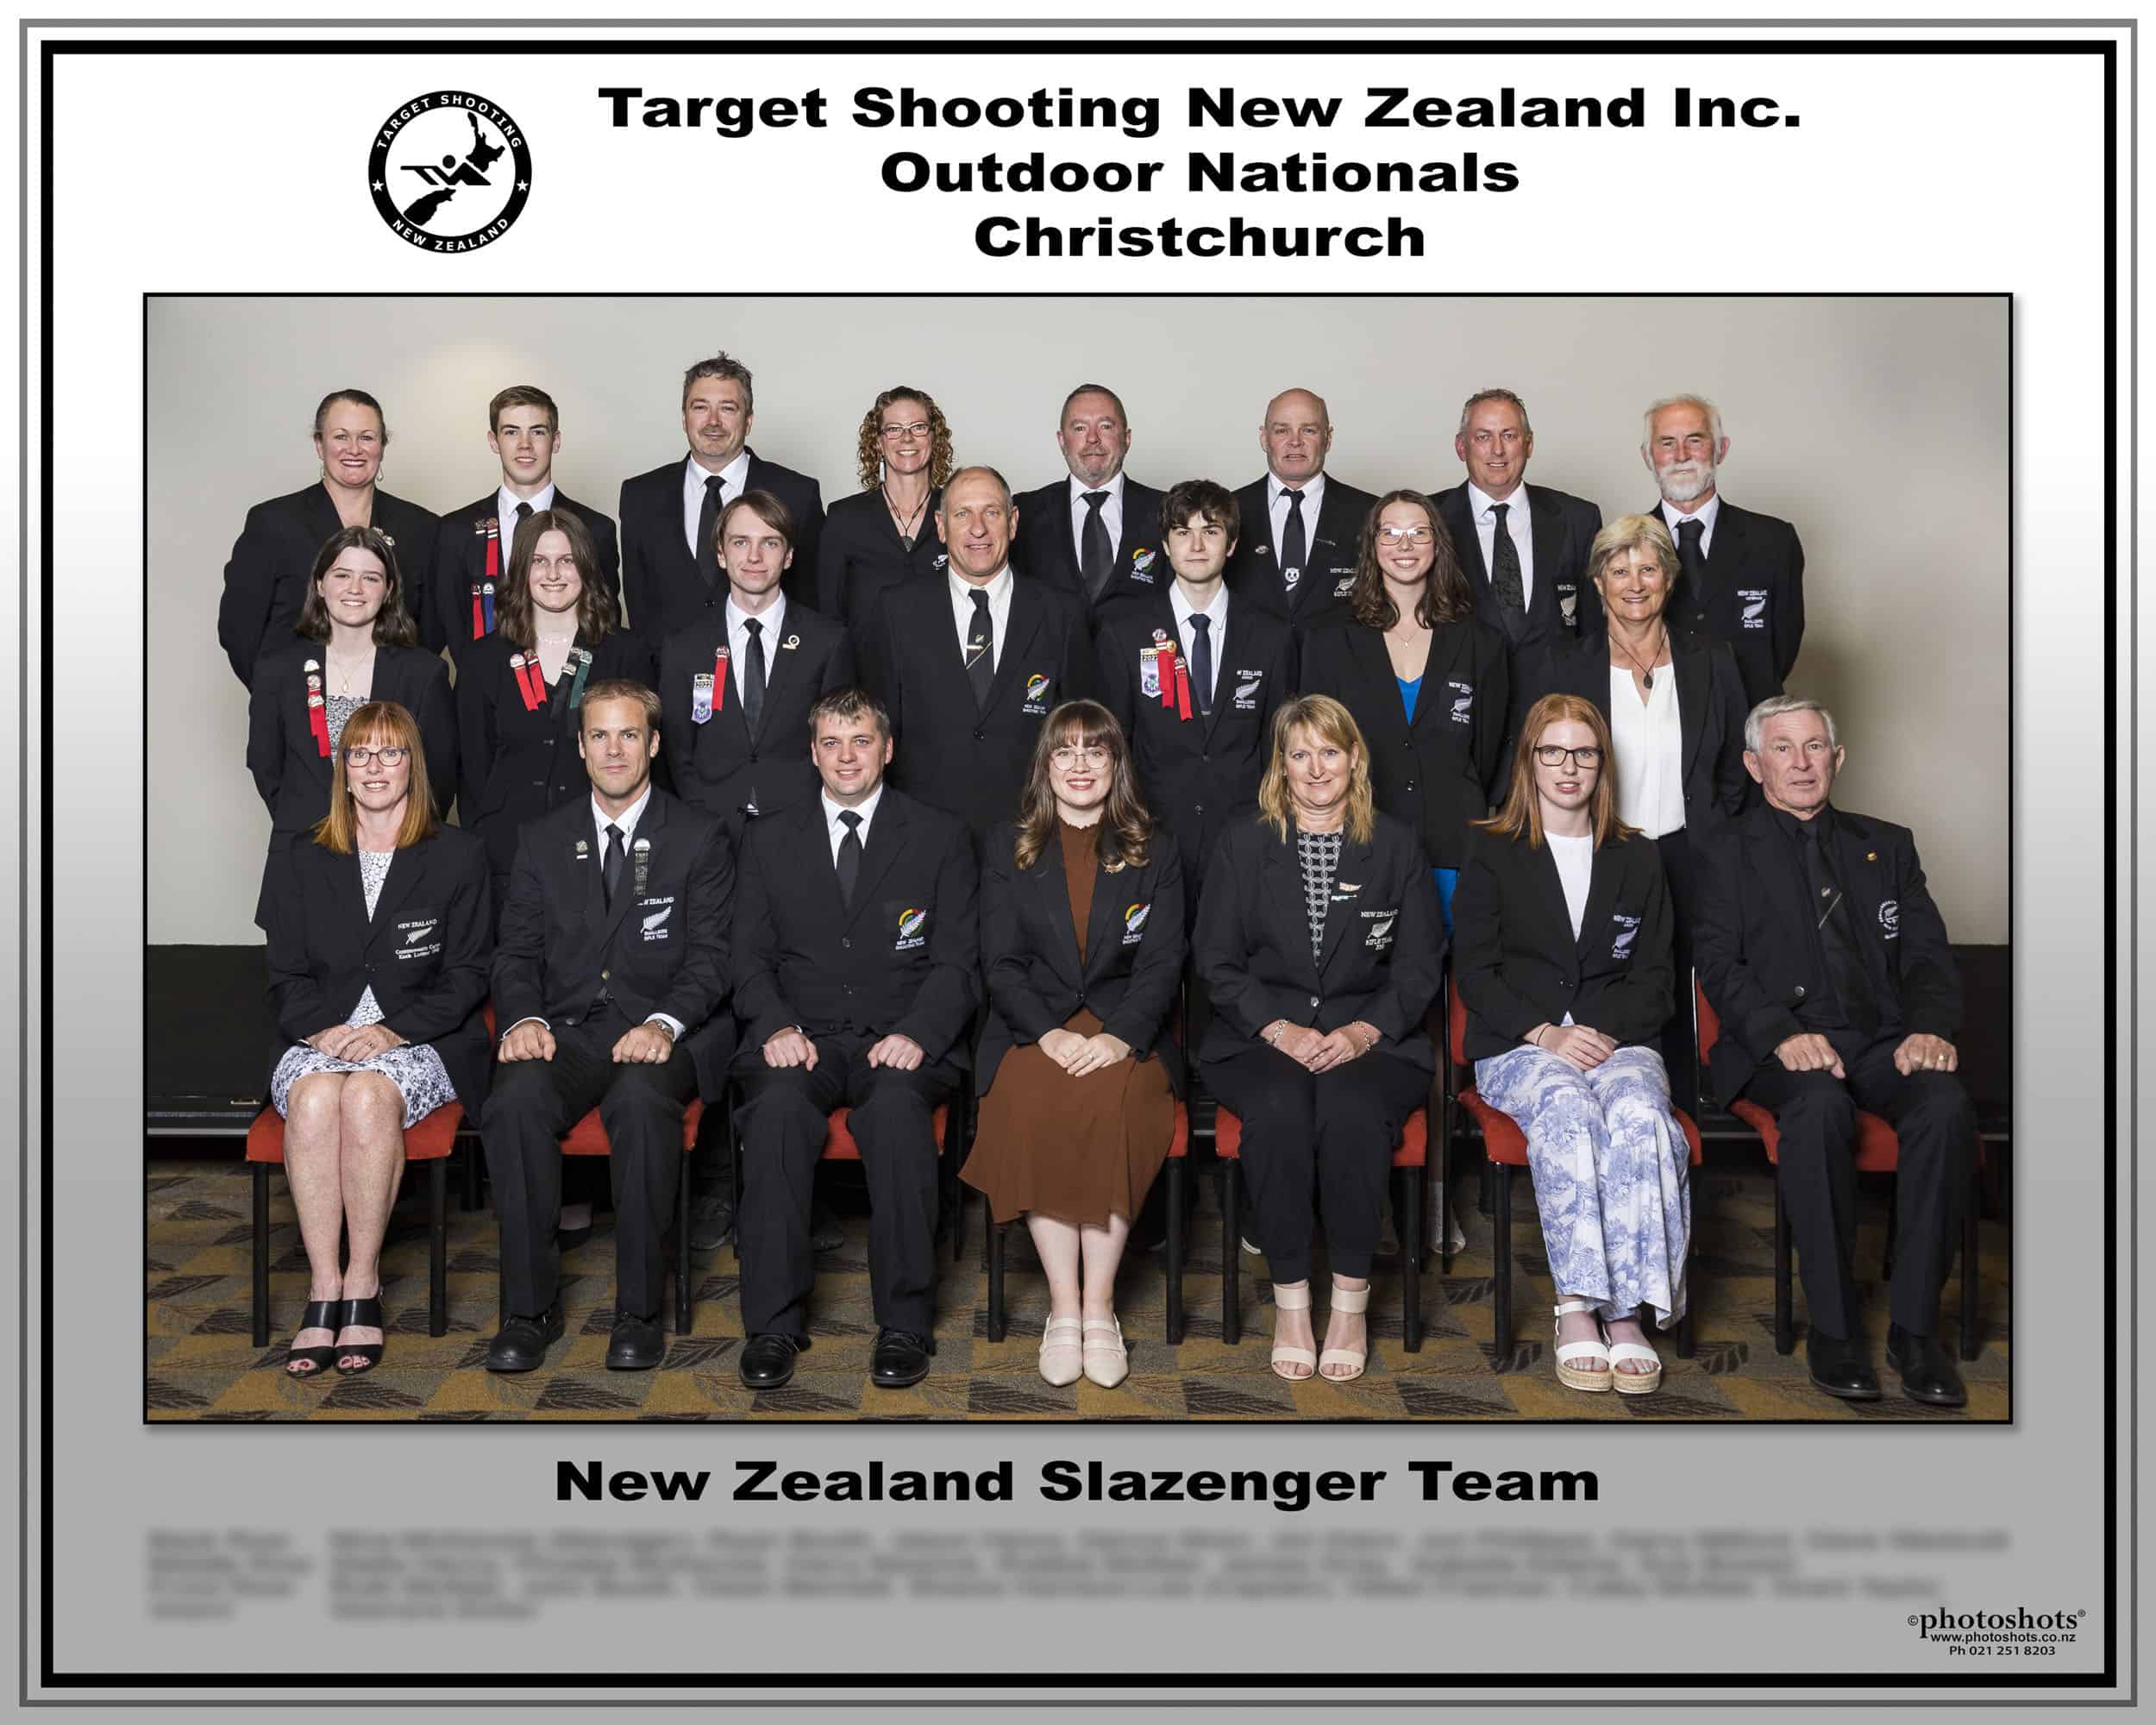 Target Shooting New Zealand formal team photo.